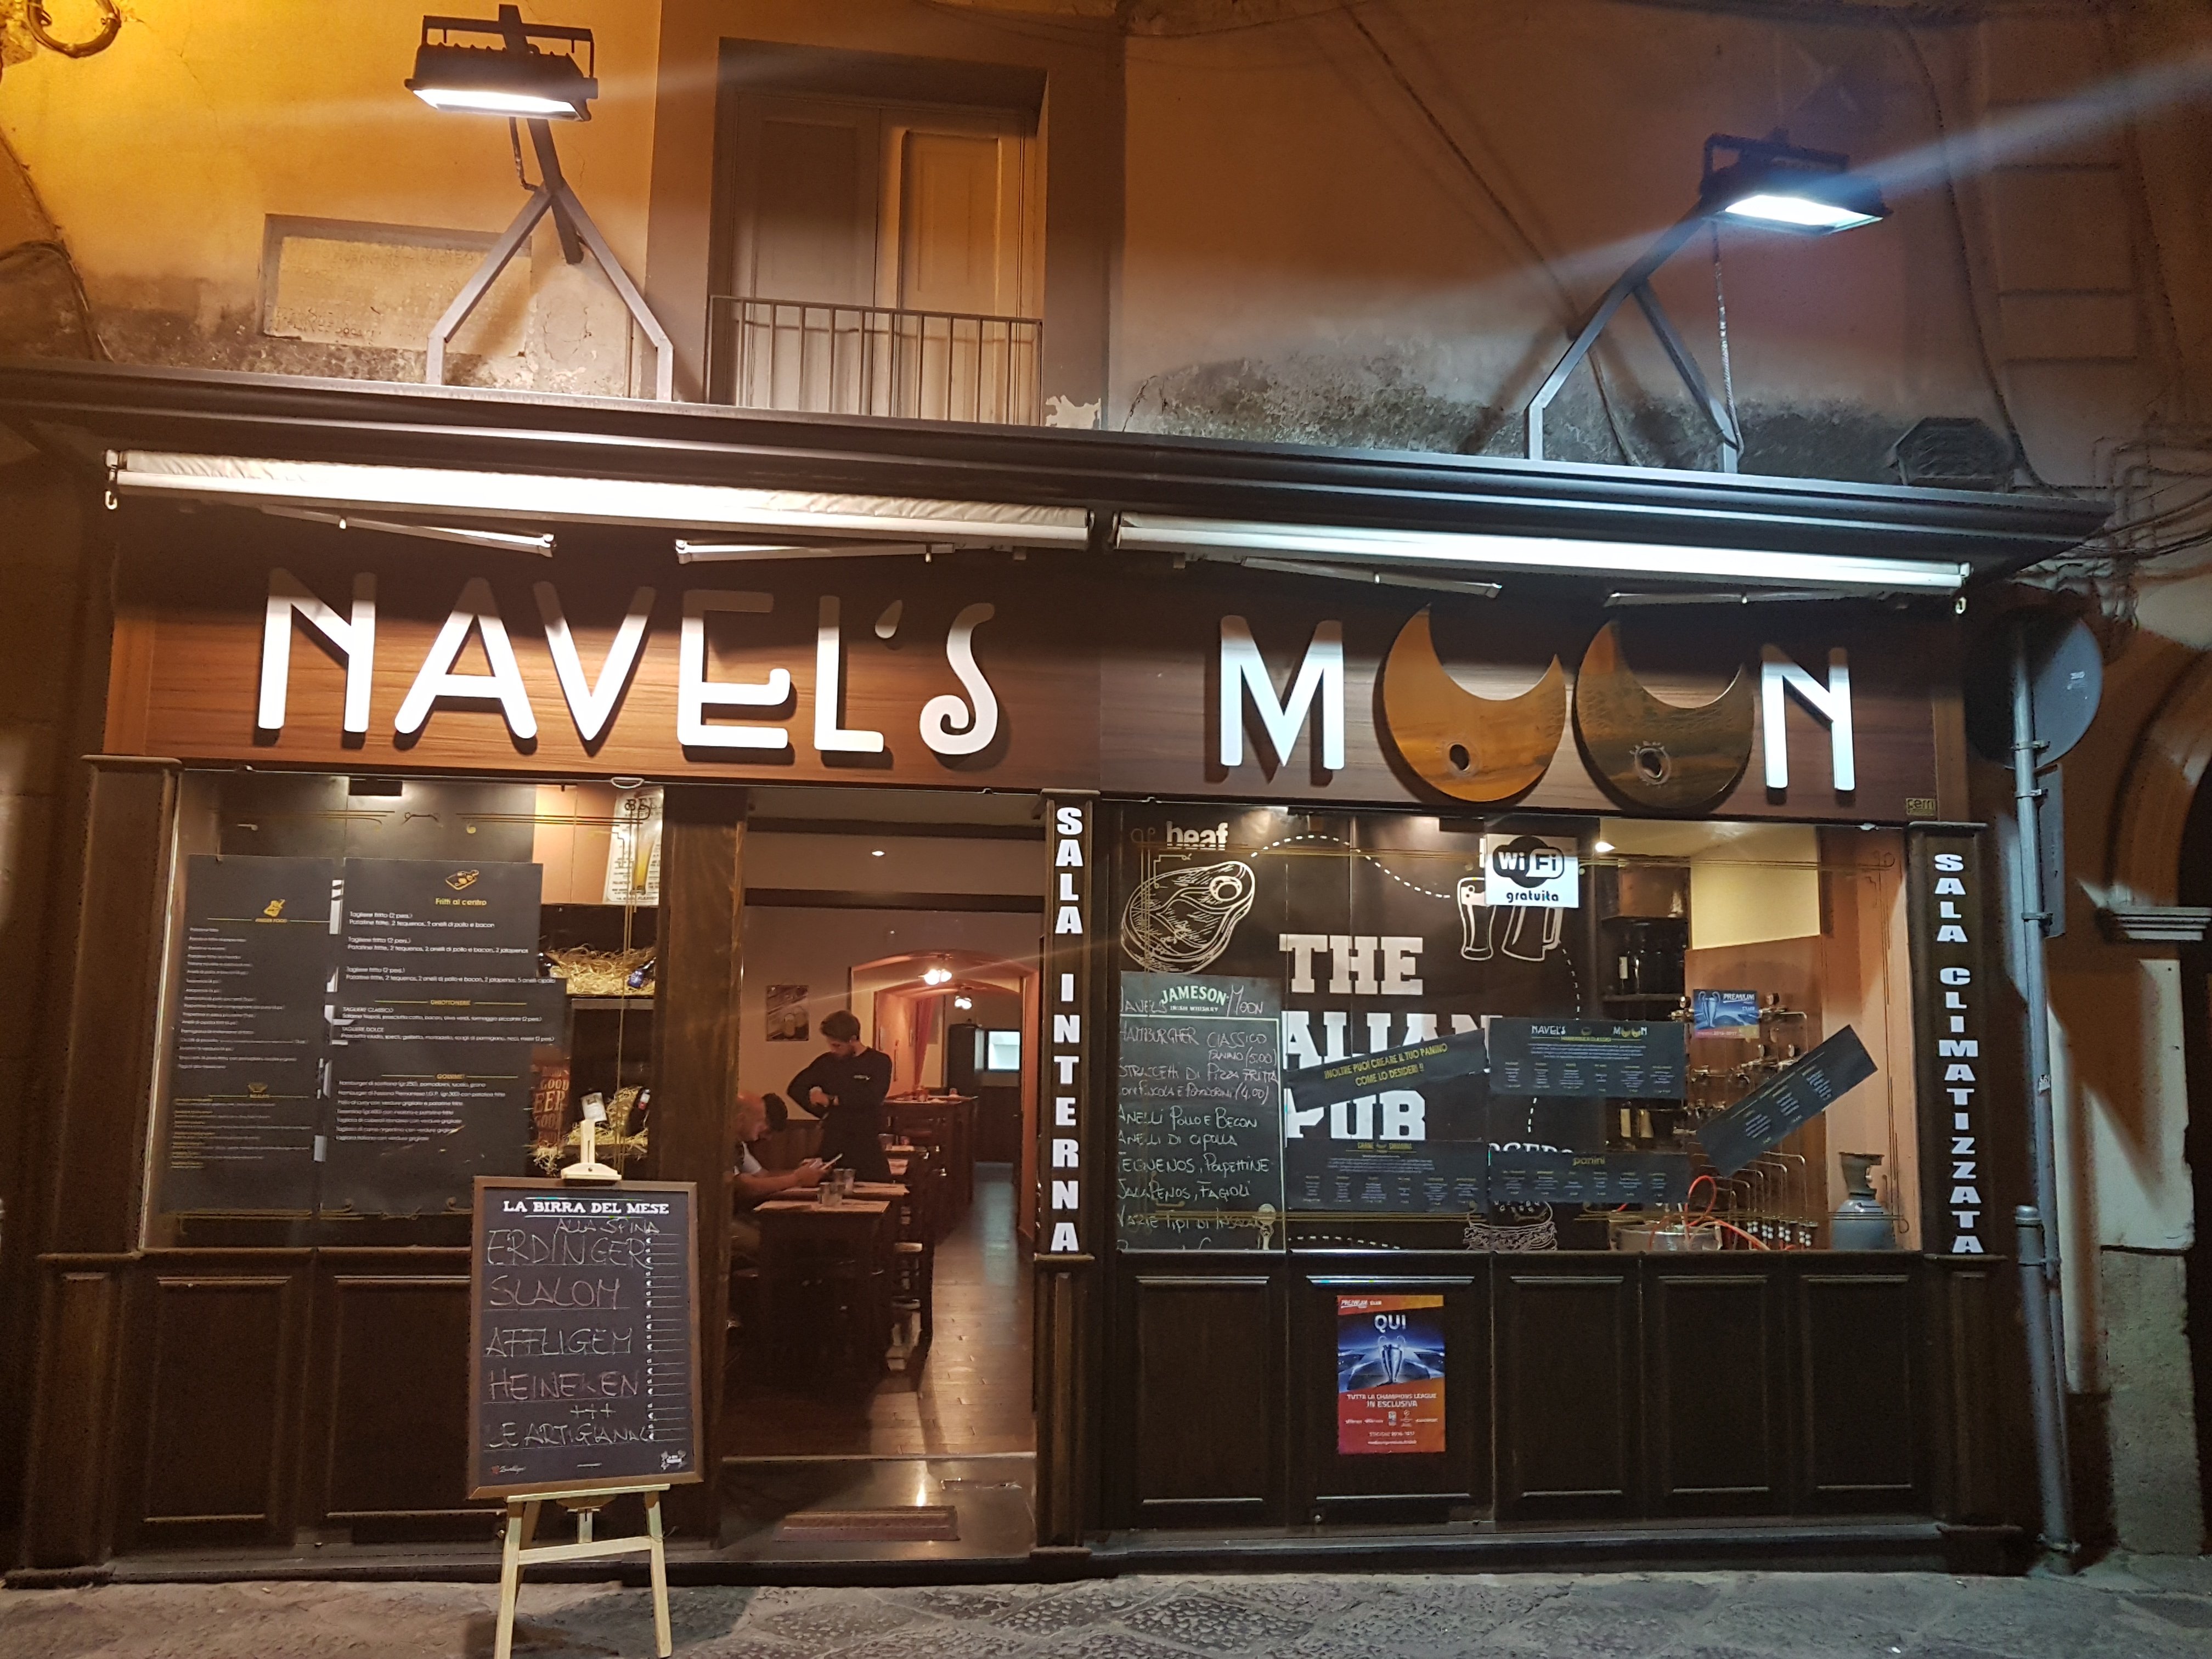 Navel's Moon, Aversa